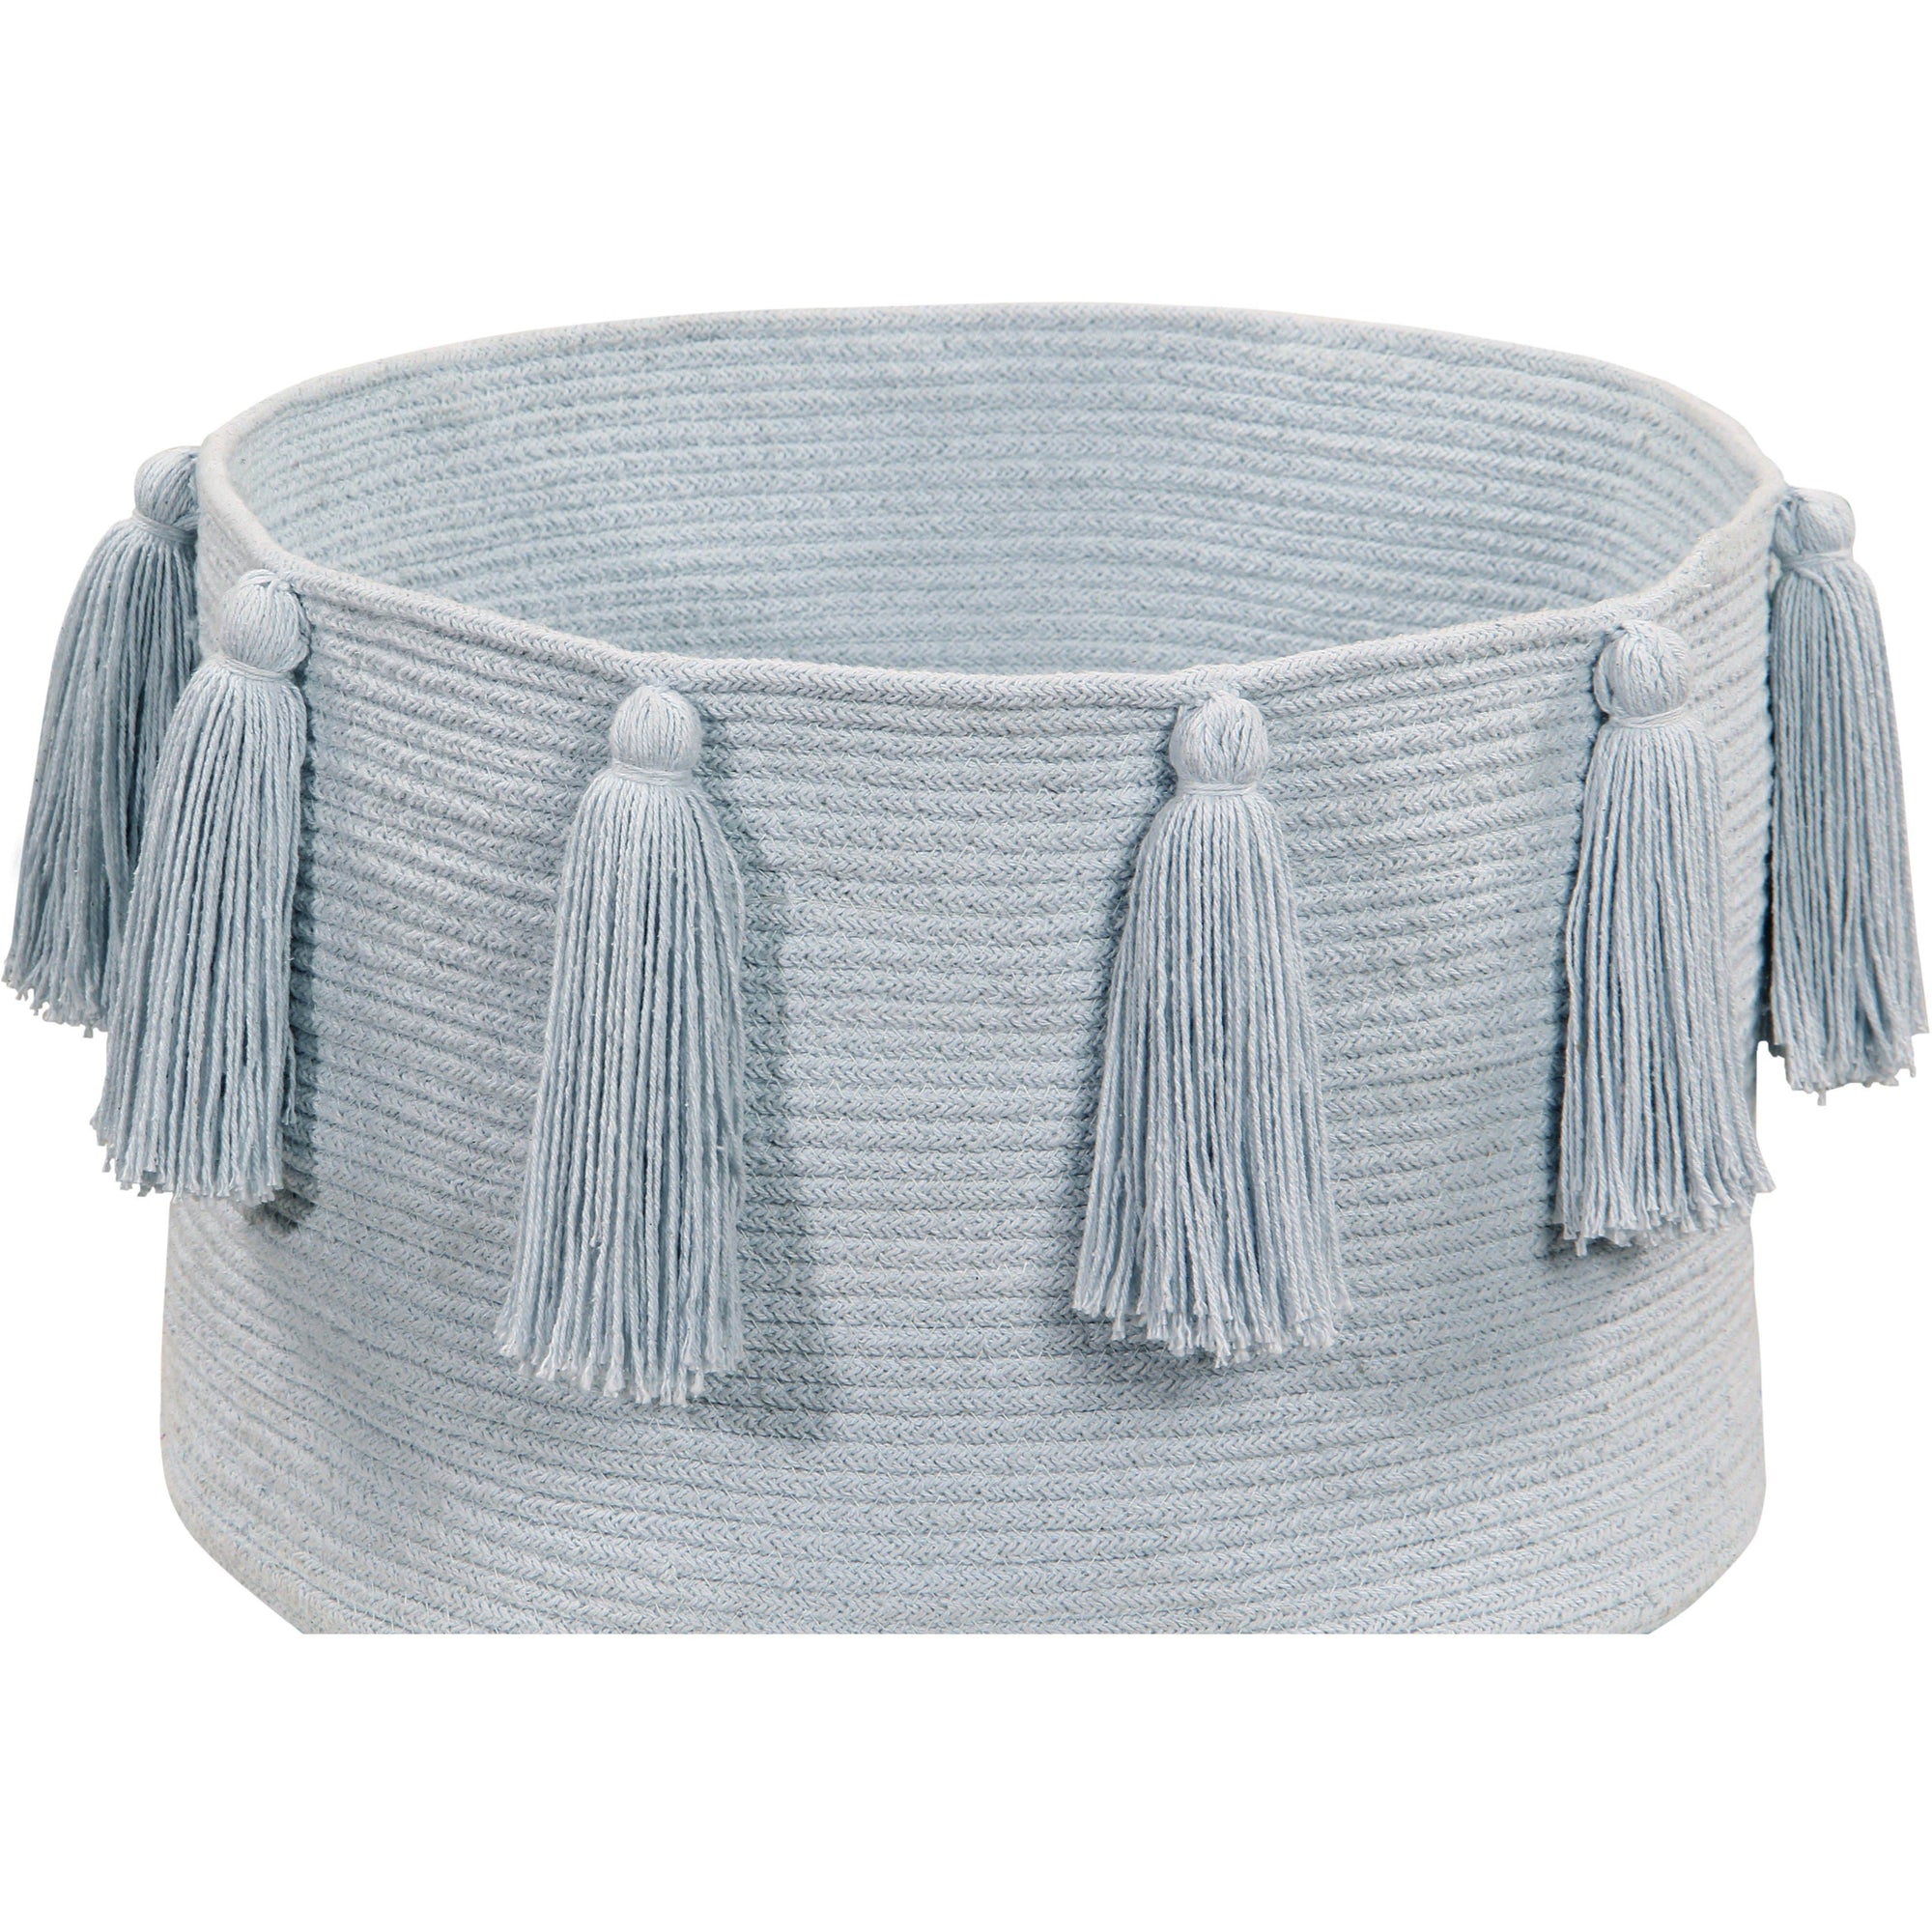 Rugs by Roo | Lorena Canals Tassels Soft Blue Basket-BSK-TAS-BL